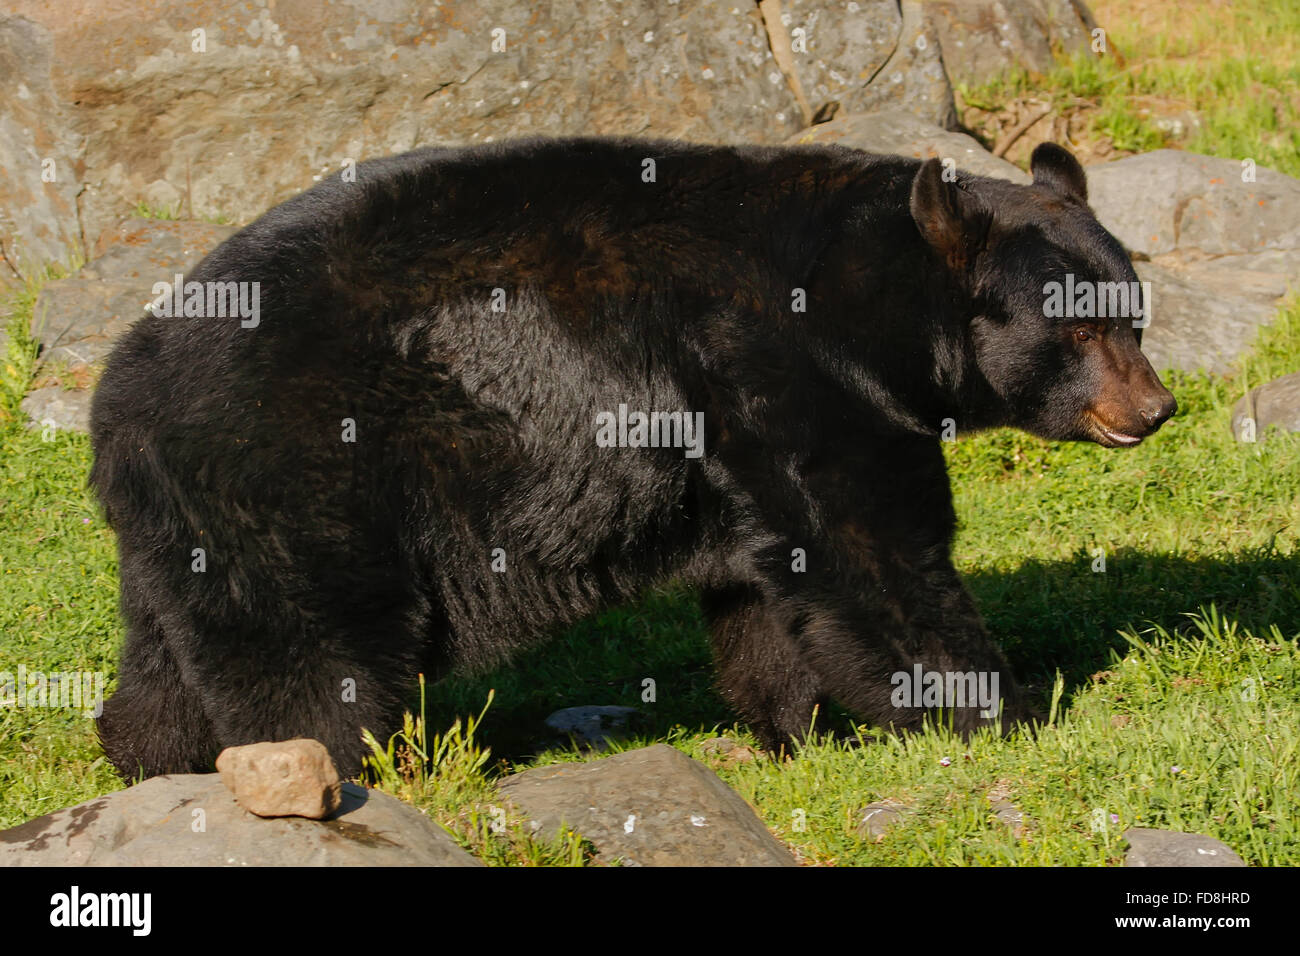 American black bear (Ursus americanus) walking near rocks Stock Photo